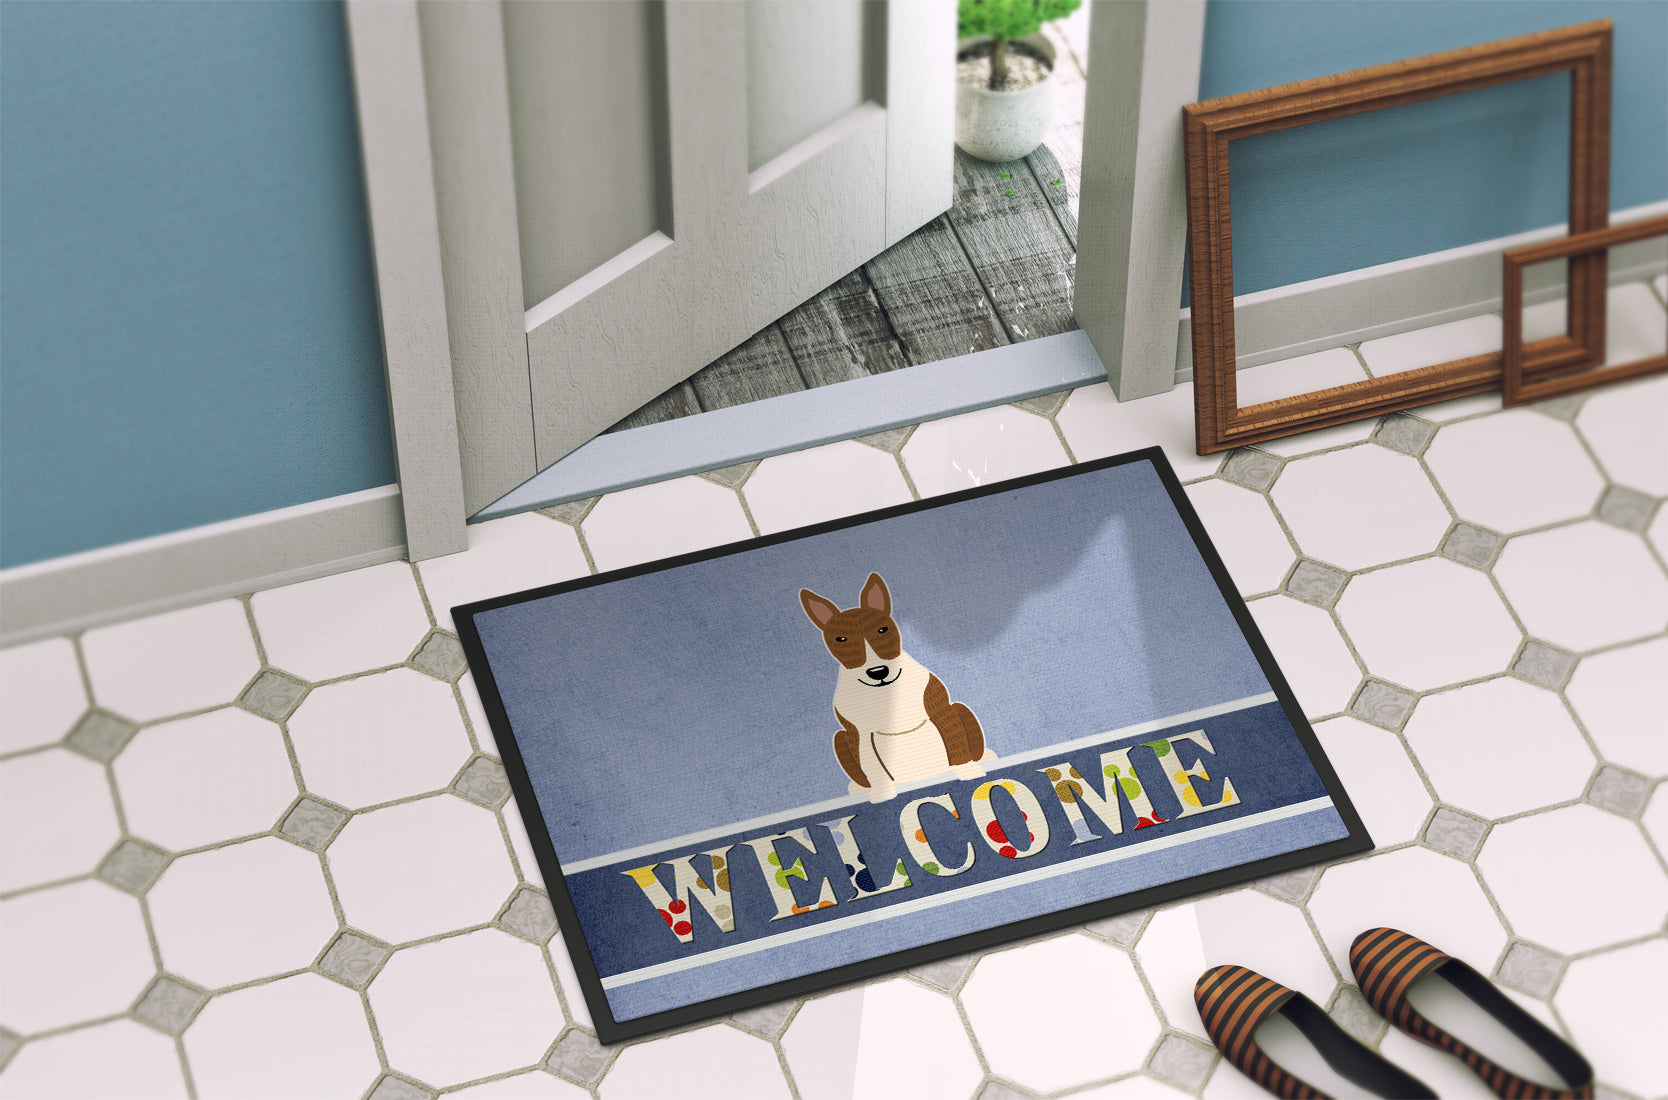 Bull Terrier Brindle Welcome Indoor or Outdoor Mat 18x27 BB5718MAT - the-store.com